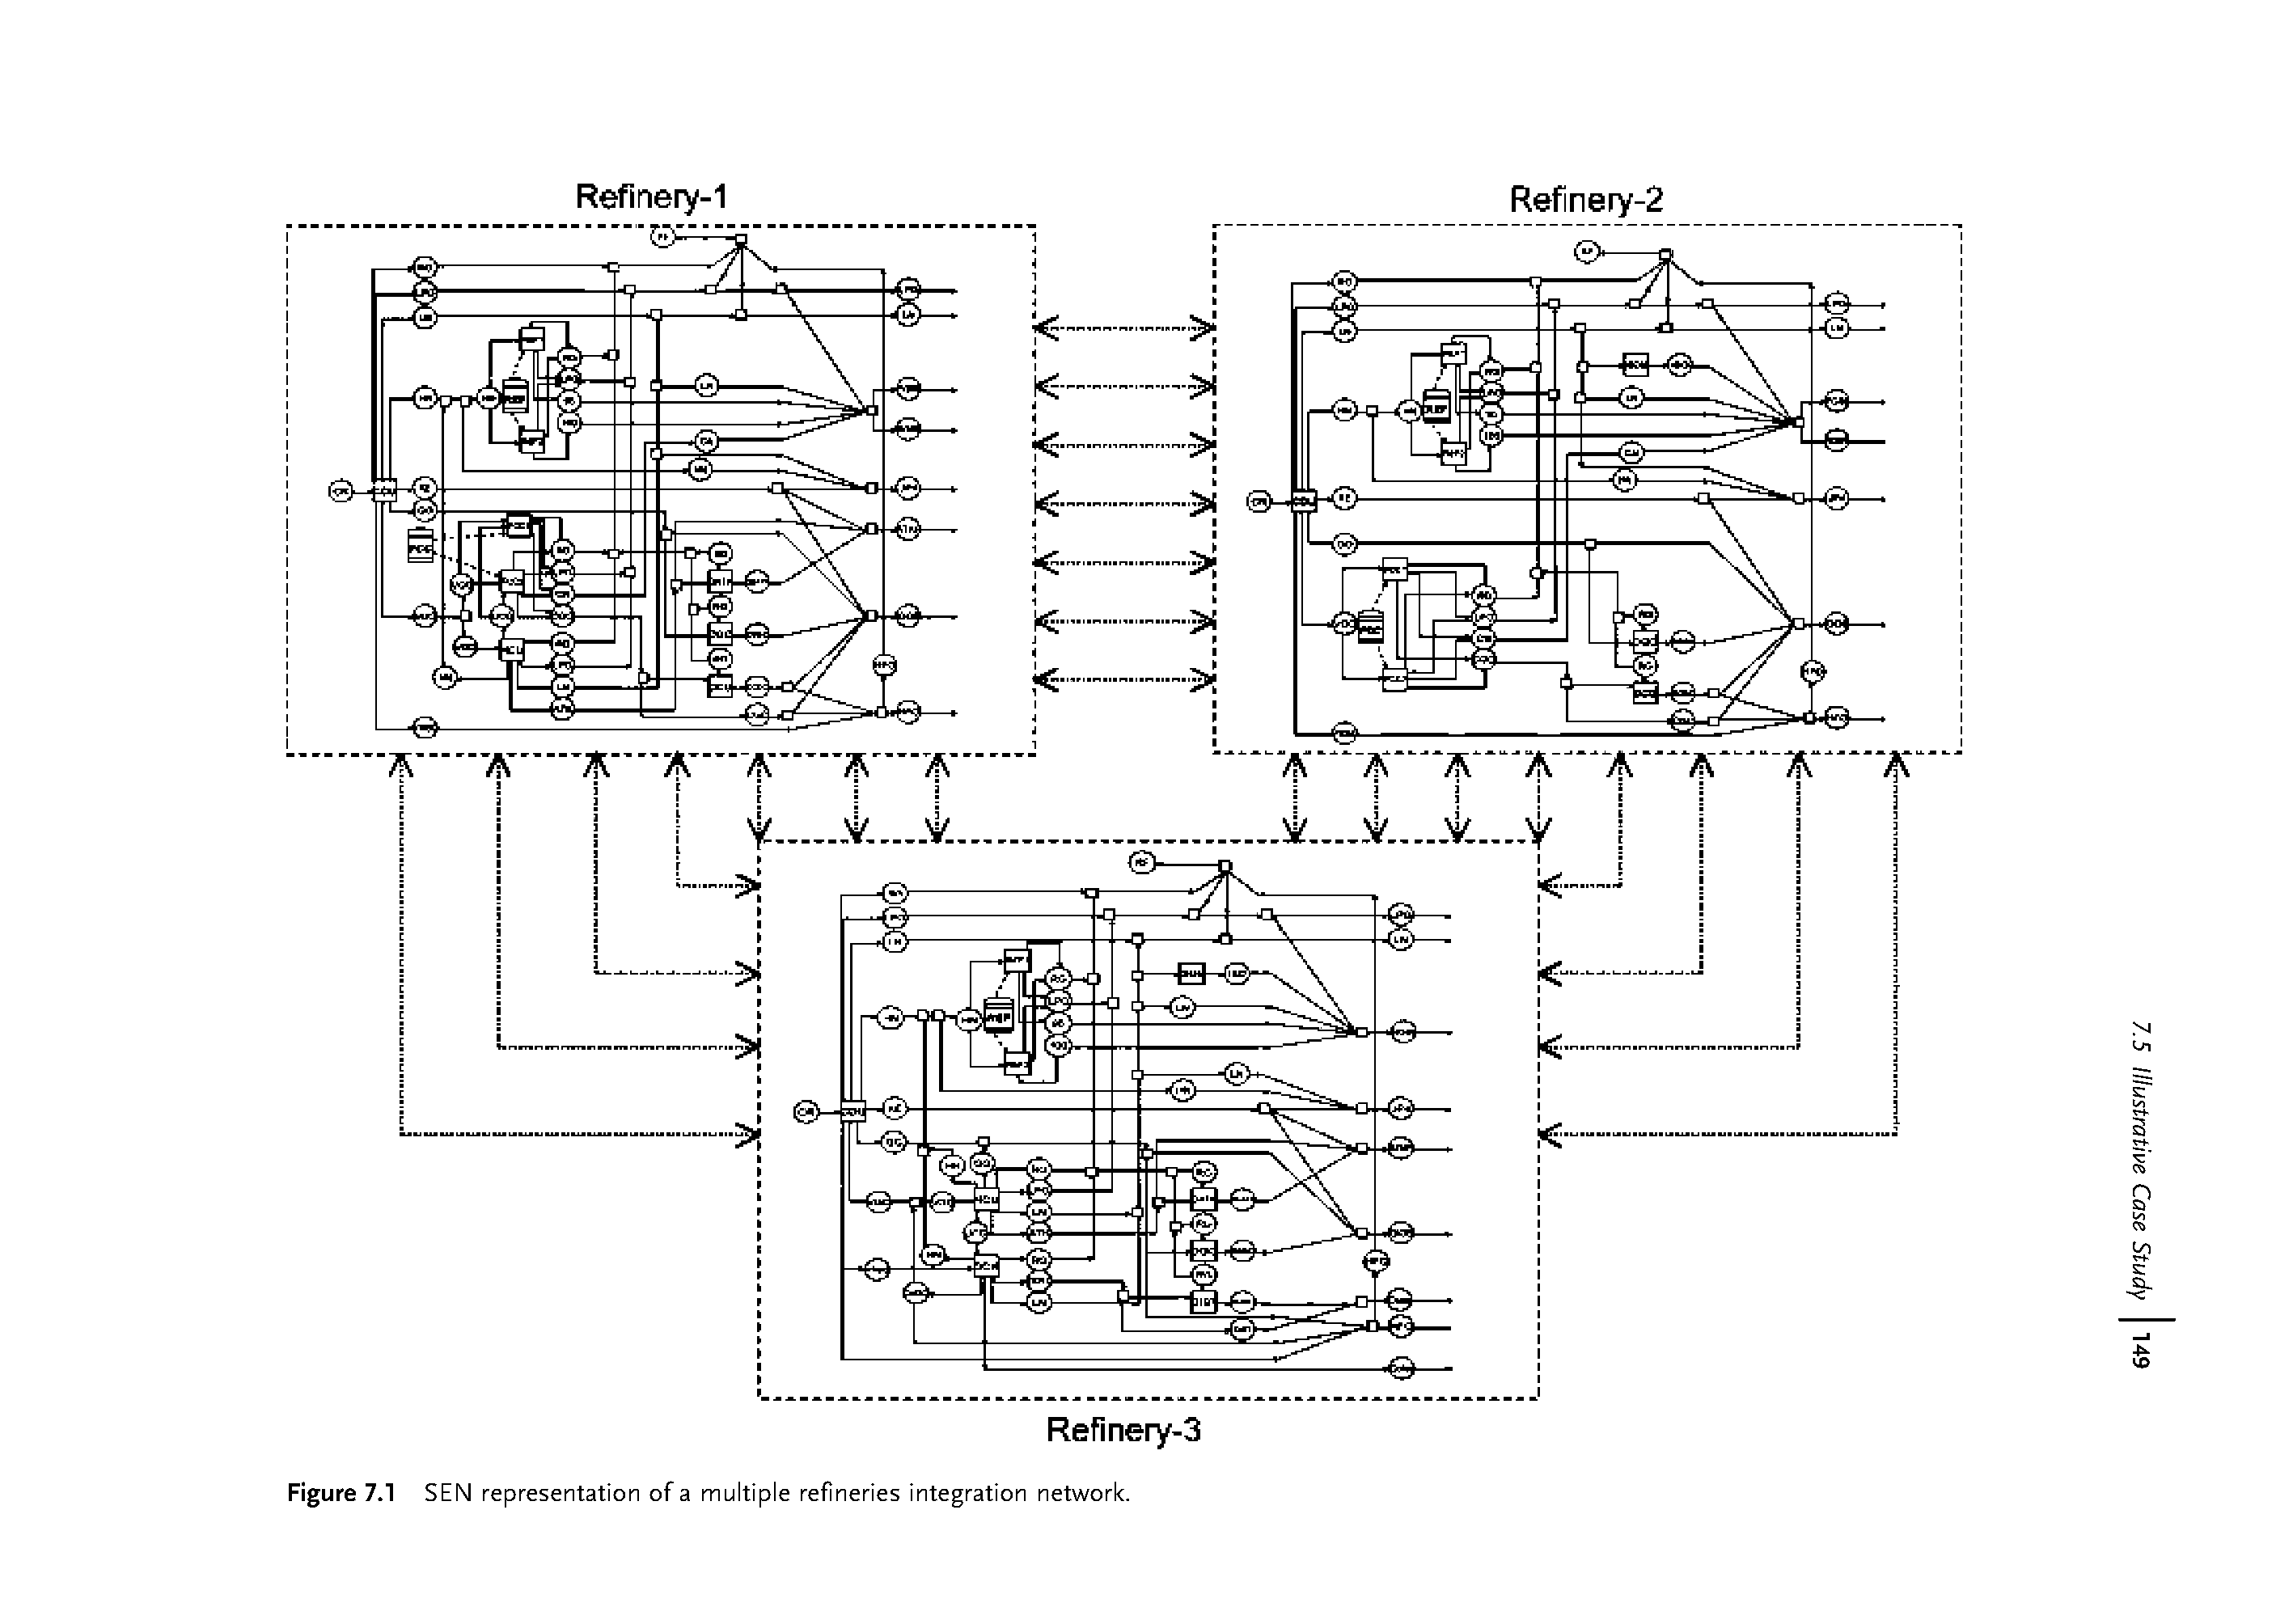 Figure 7.1 SEN representation of a multiple refineries integration network.